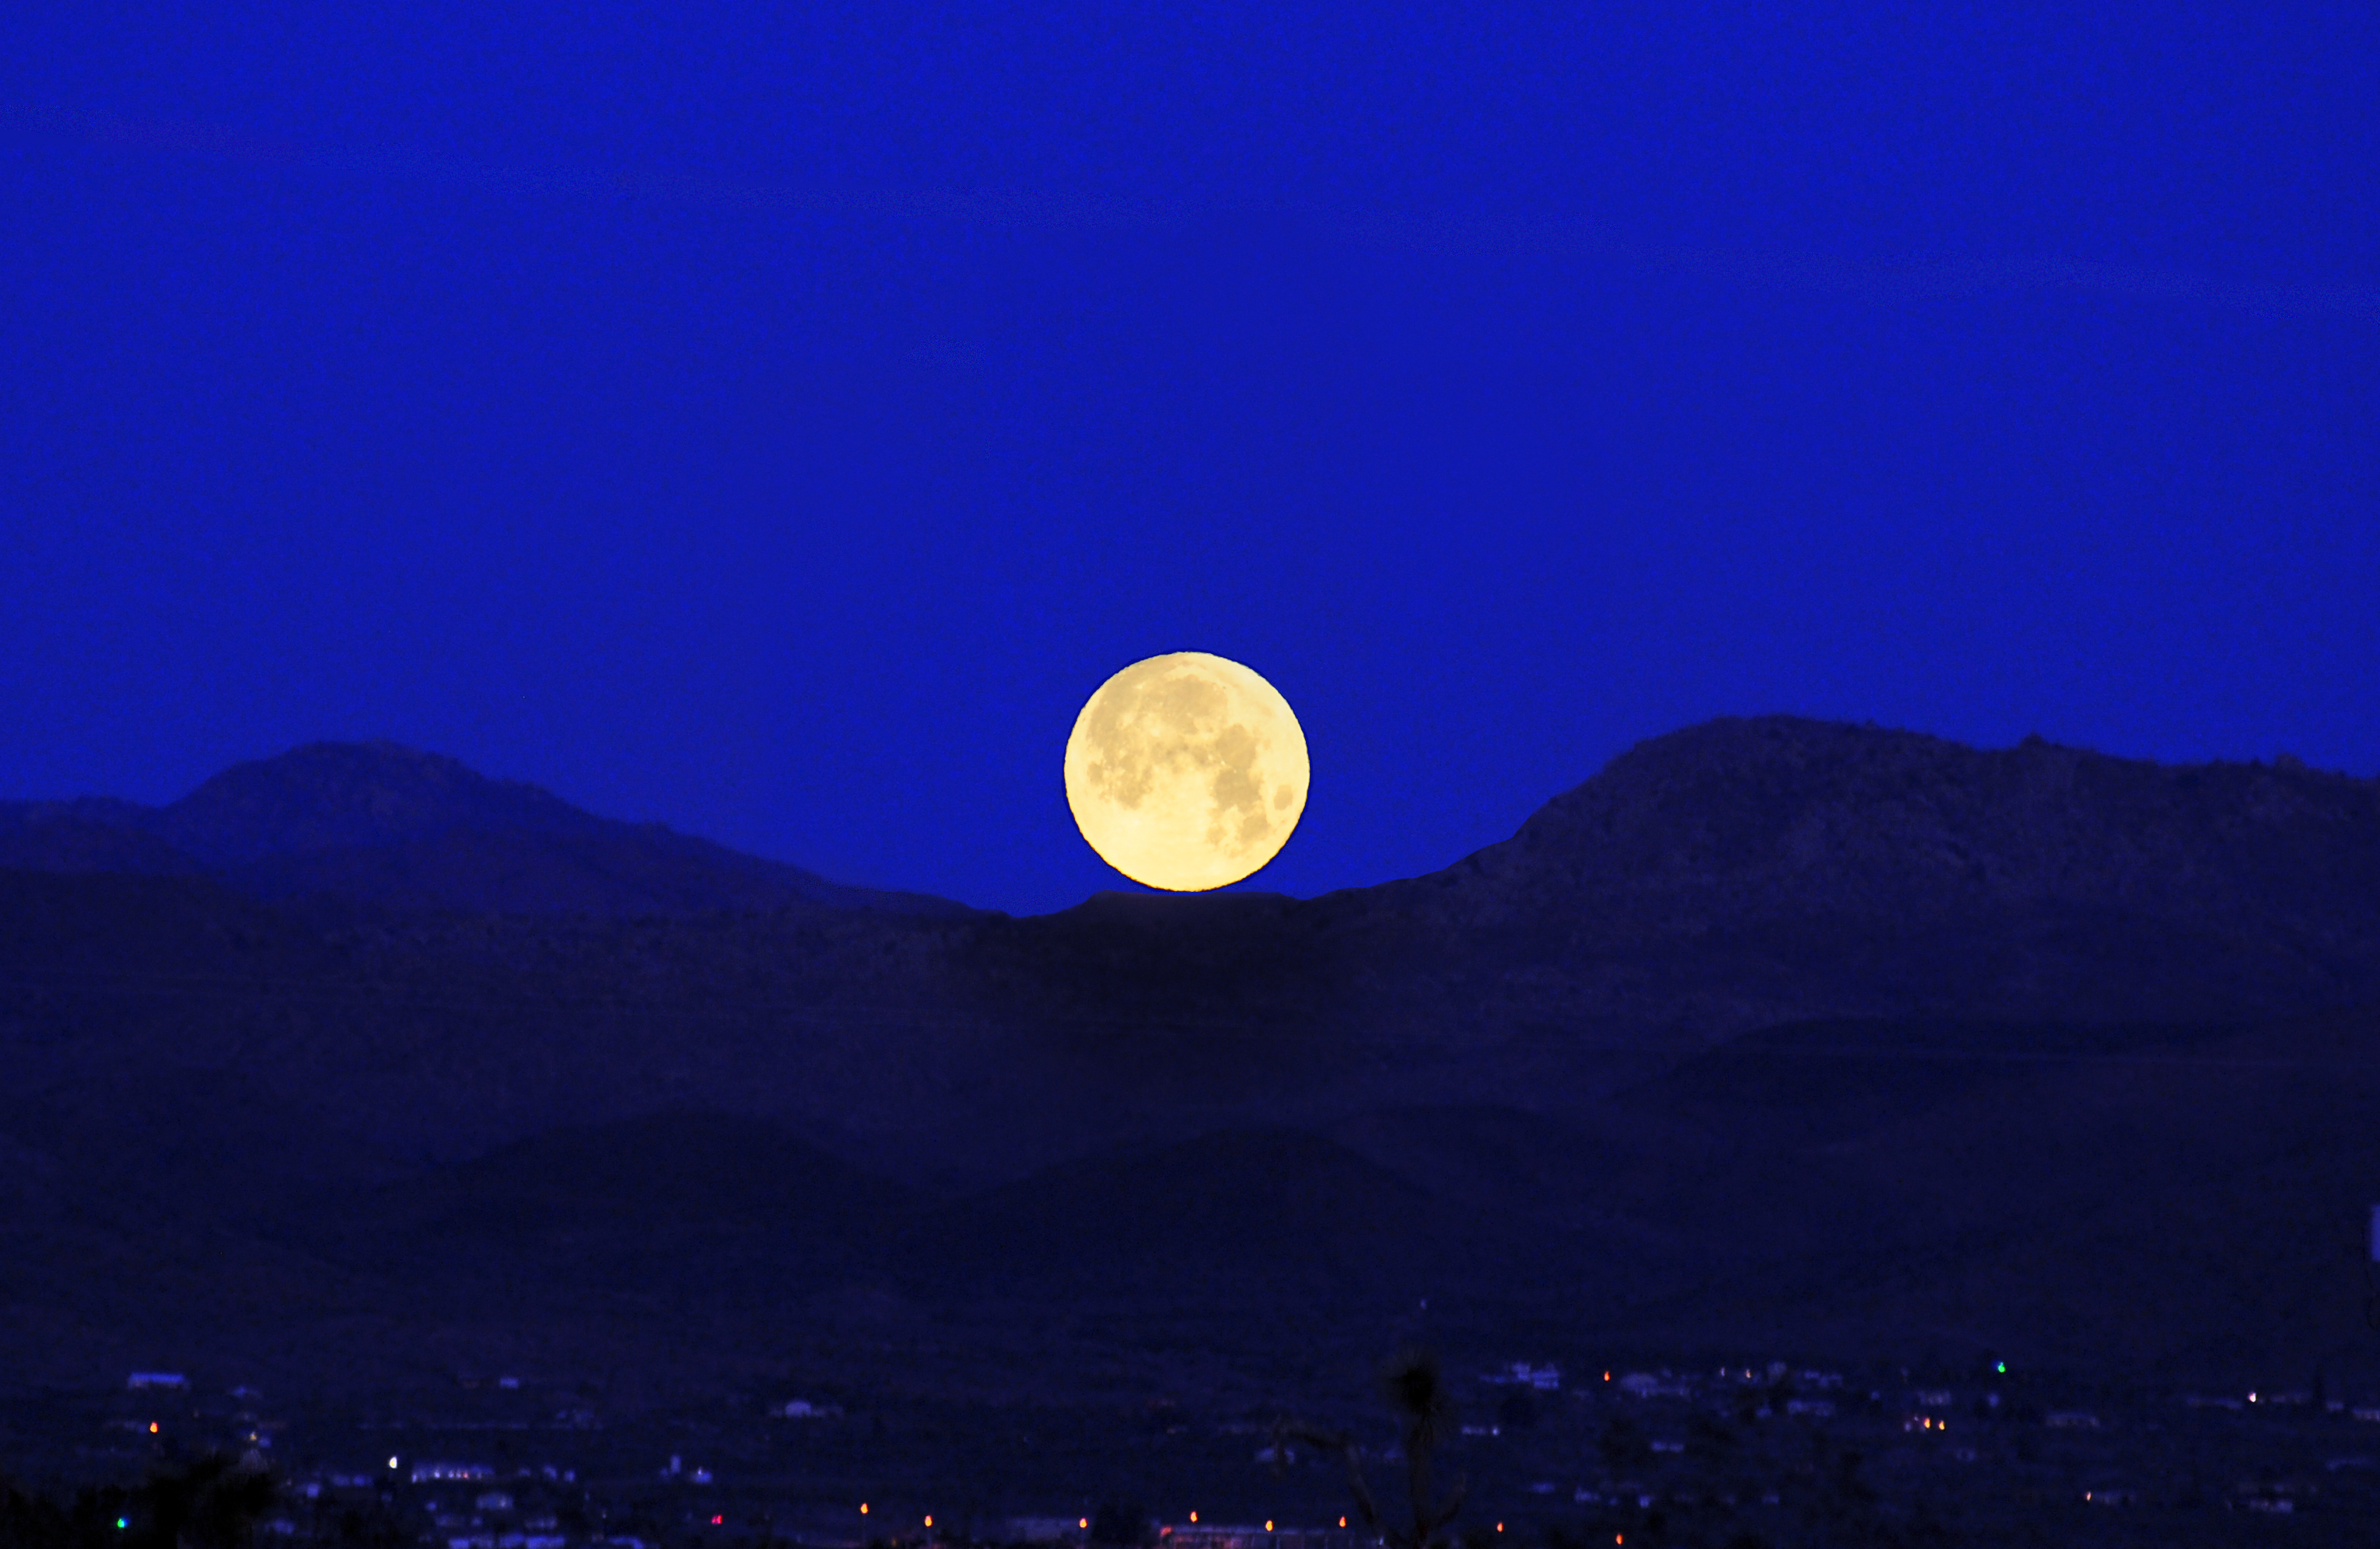 File:Early Morning Moonset.jpg - Wikimedia Commons